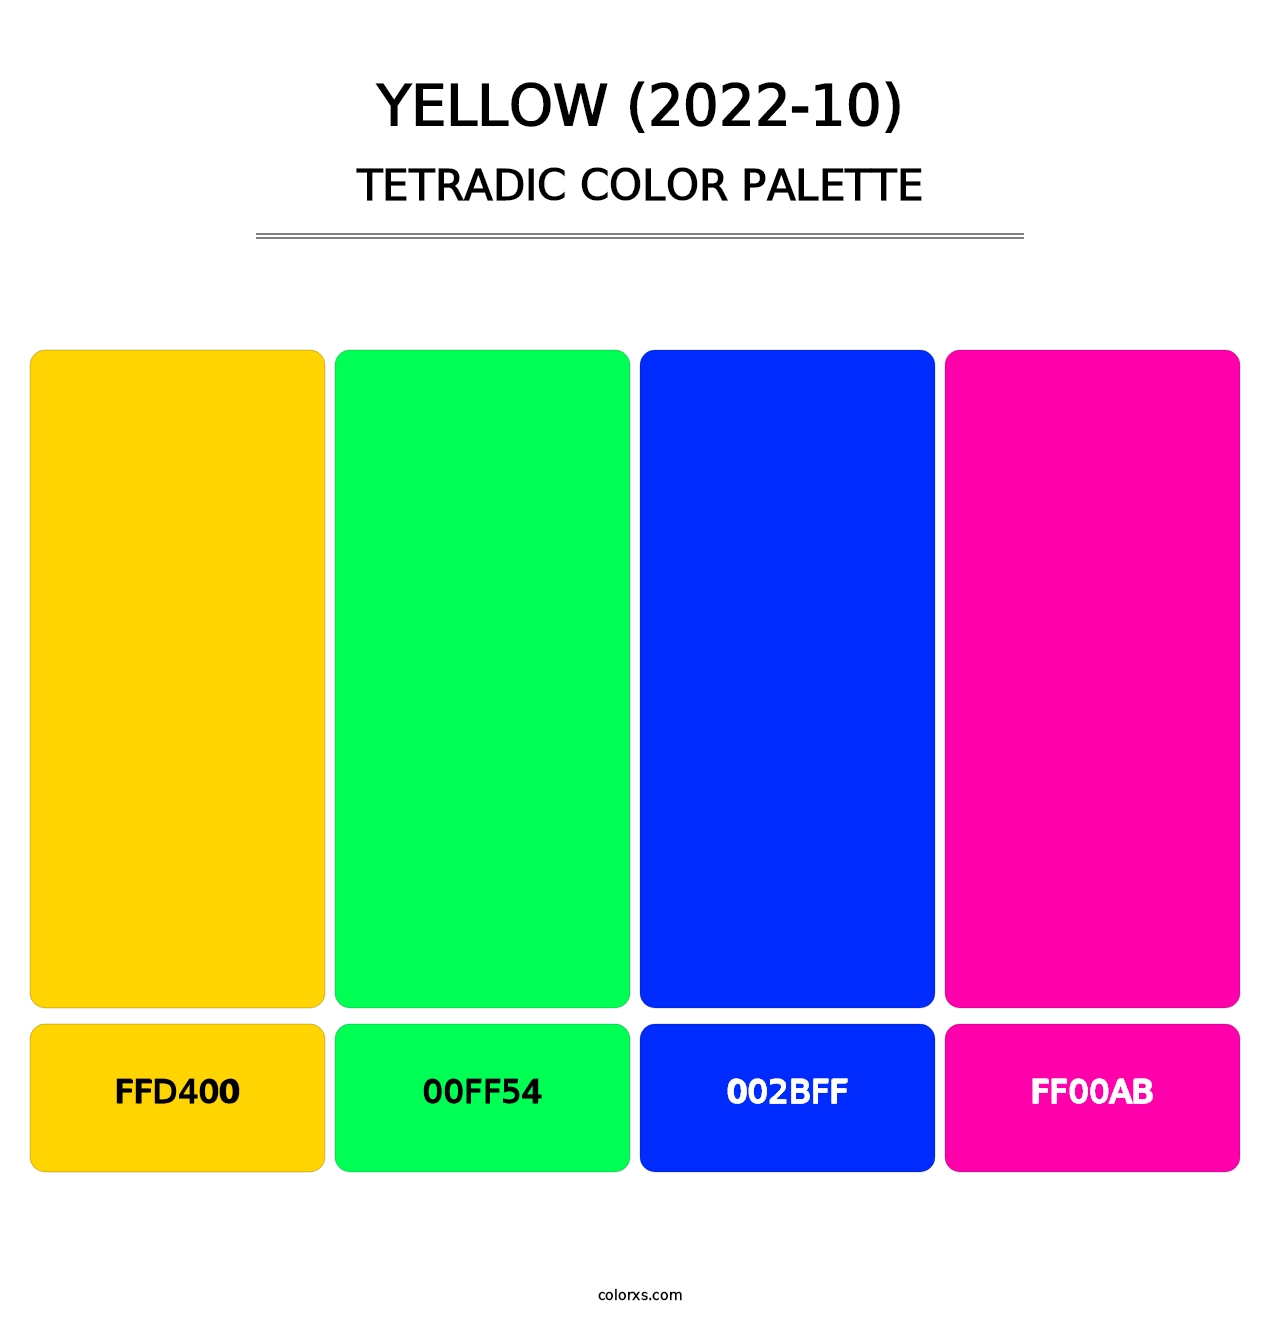 Yellow (2022-10) - Tetradic Color Palette